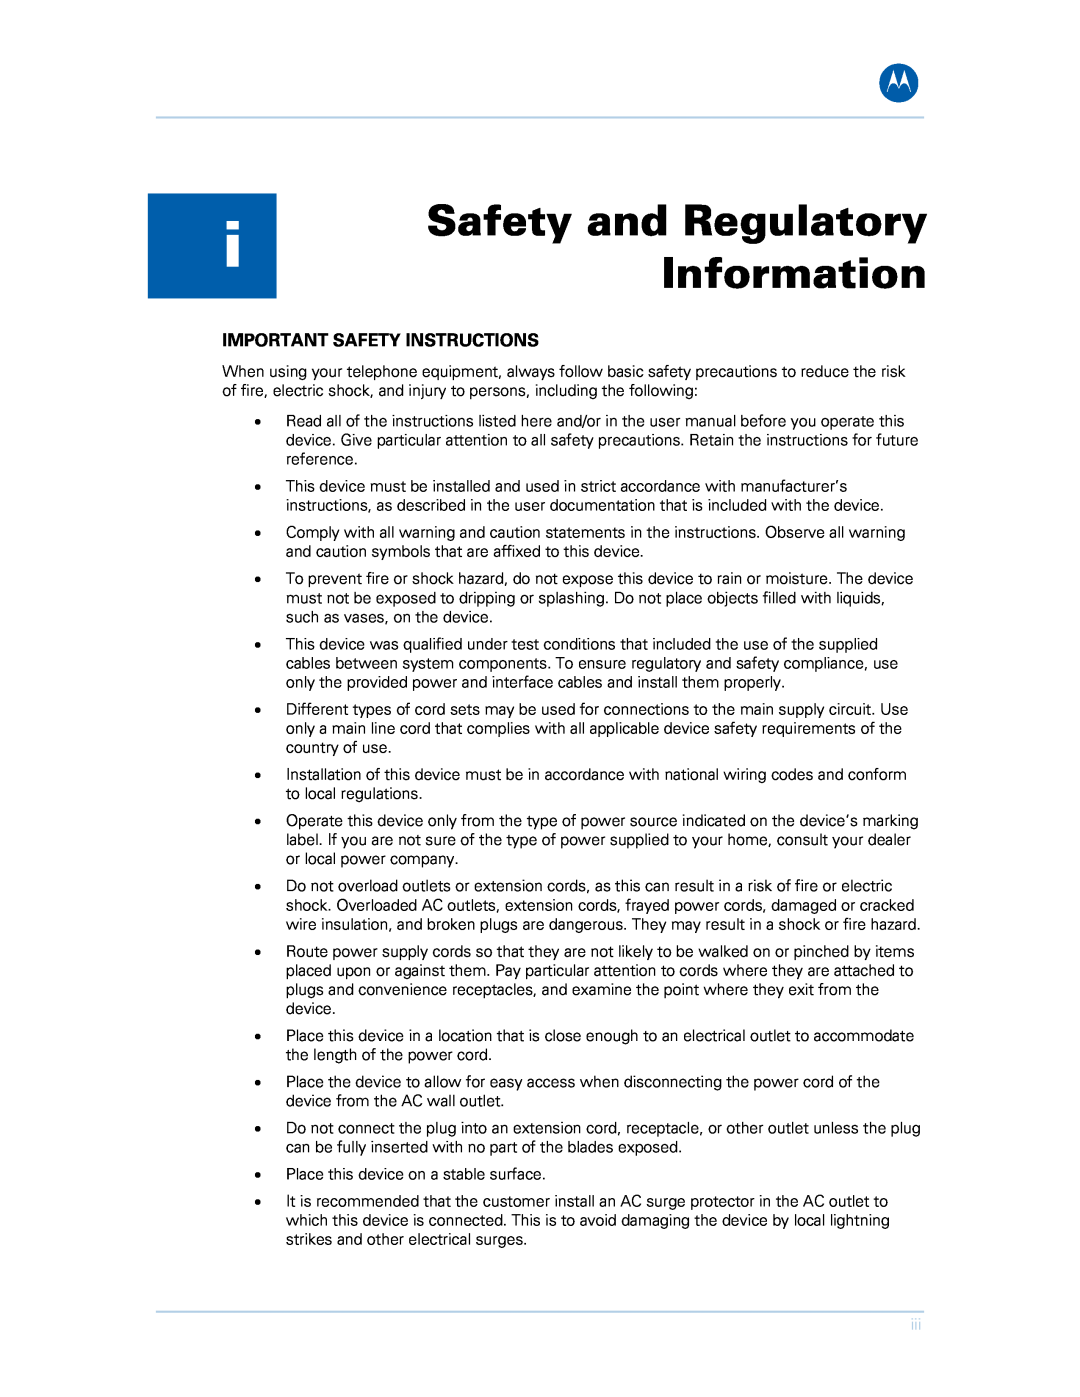 Motorola SVG1501E, SVG1501UE manual Safety and Regulatory Information, Important Safety Instructions 